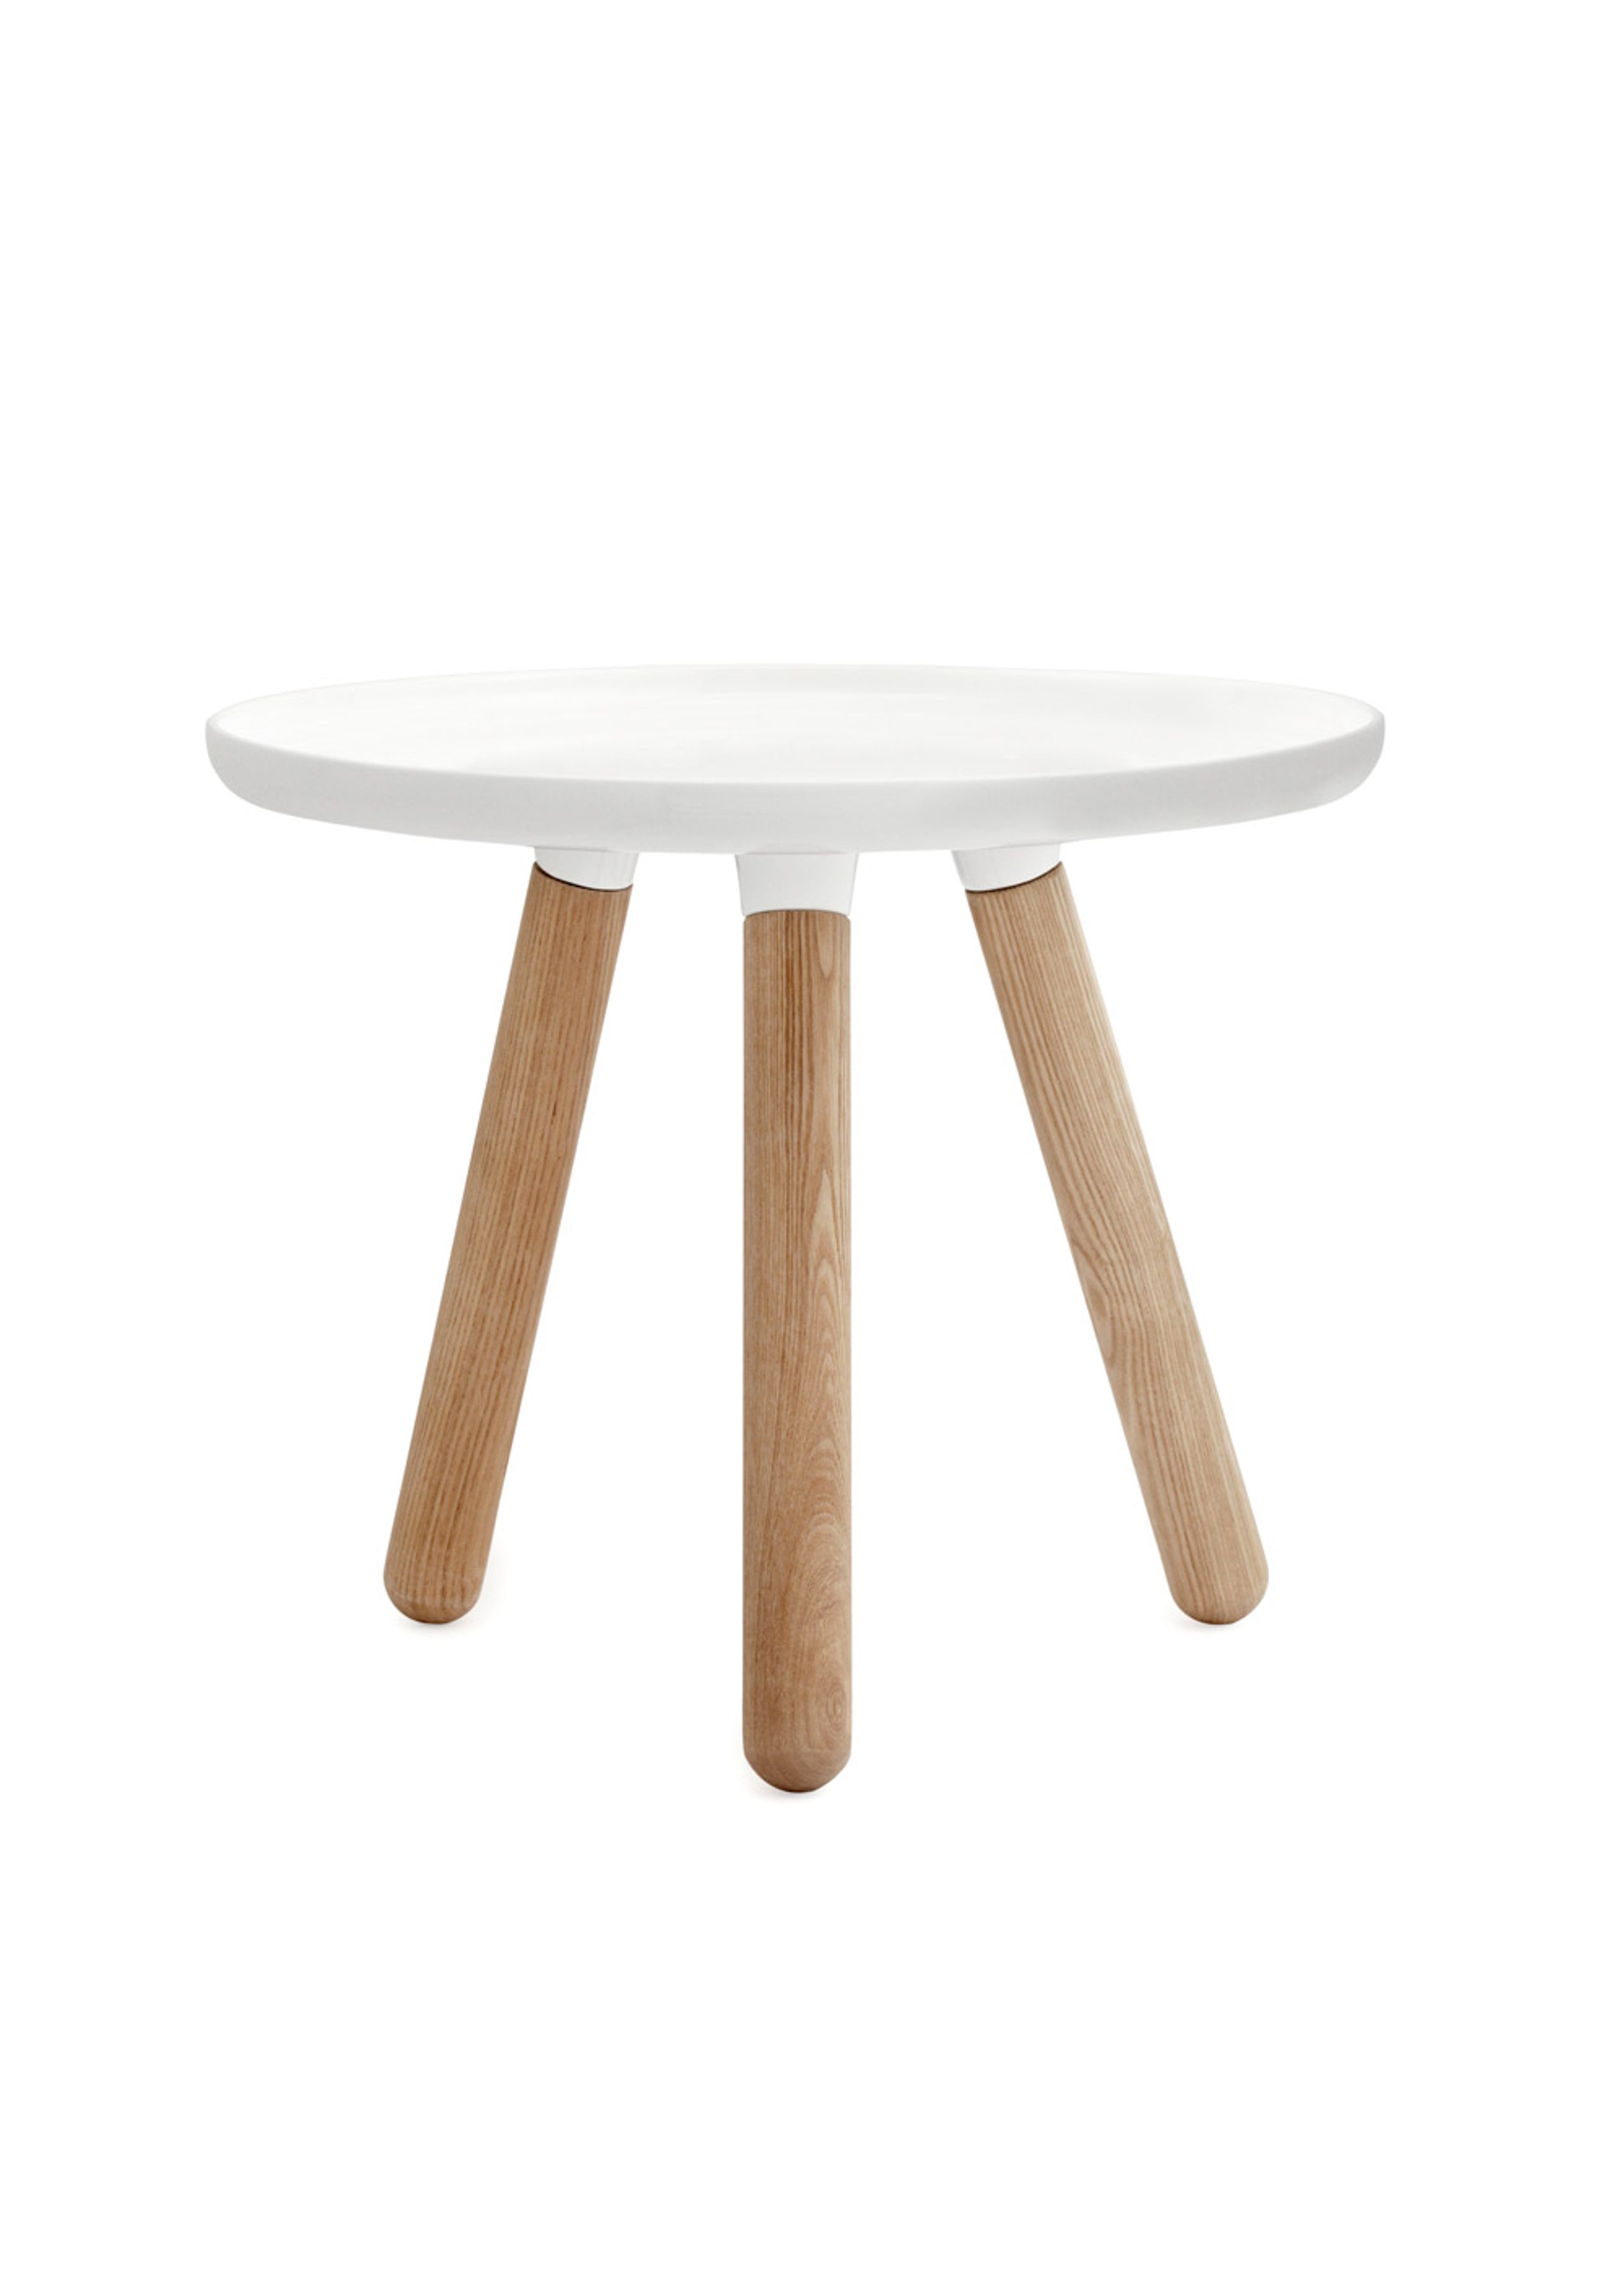 Normann Copenhagen - Conselho - Tablo Table - Small - White